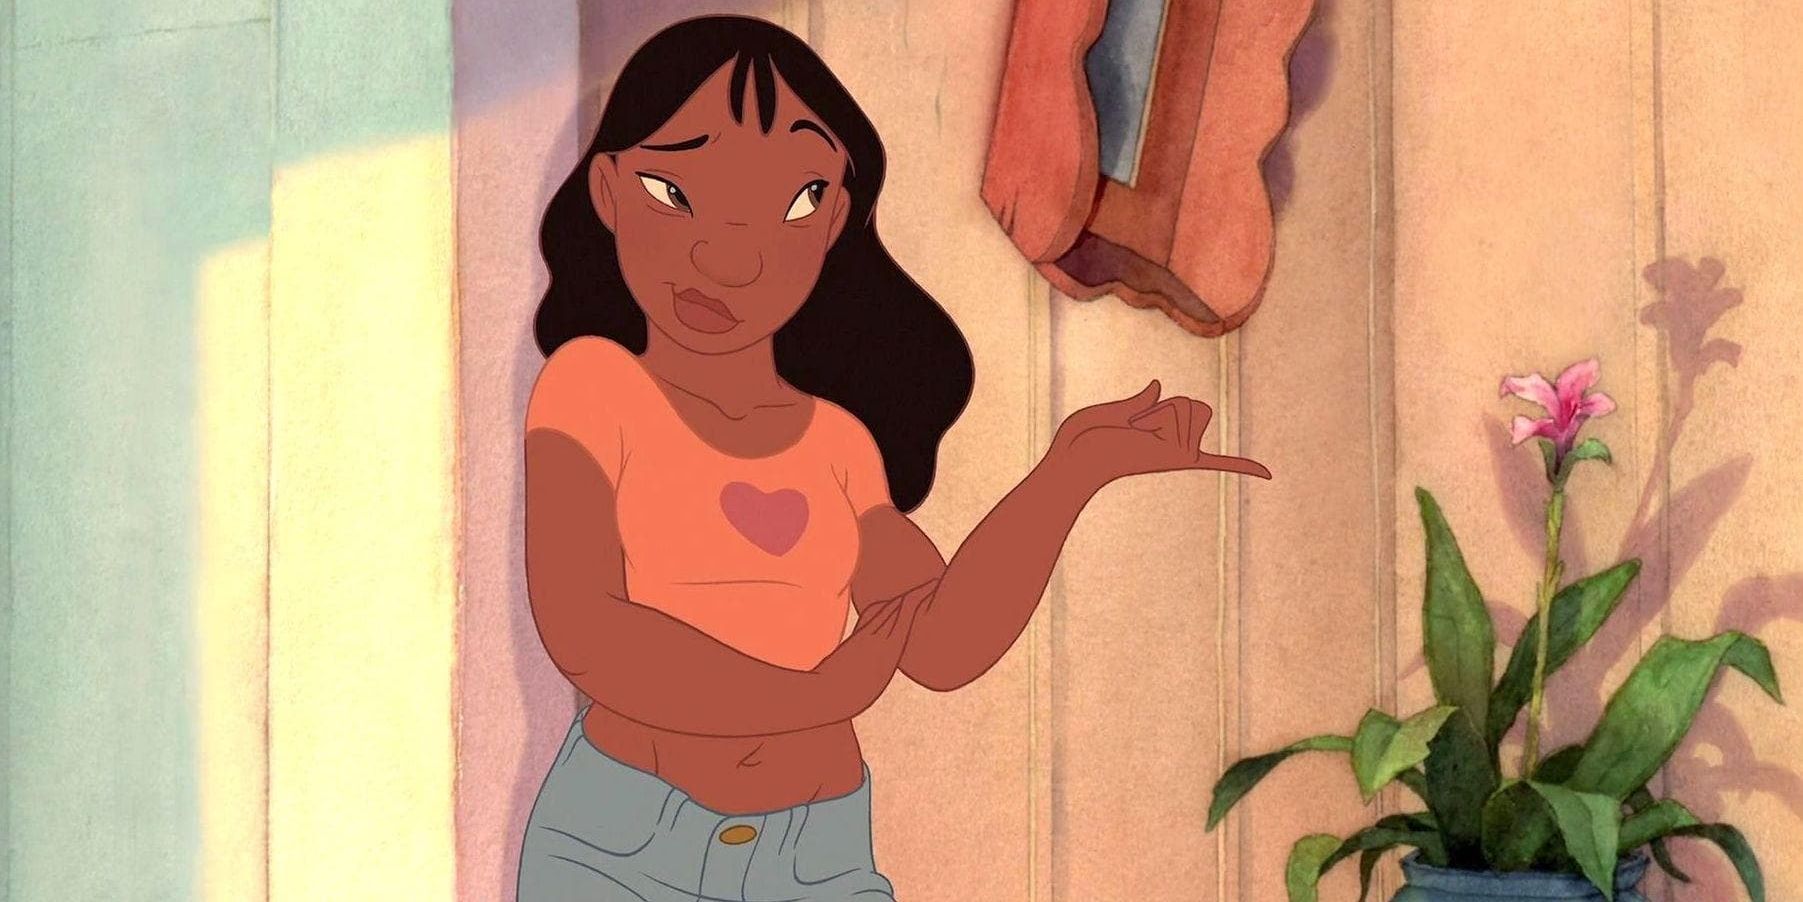 Nani Pelekai in Disney's Lilo & Stitch